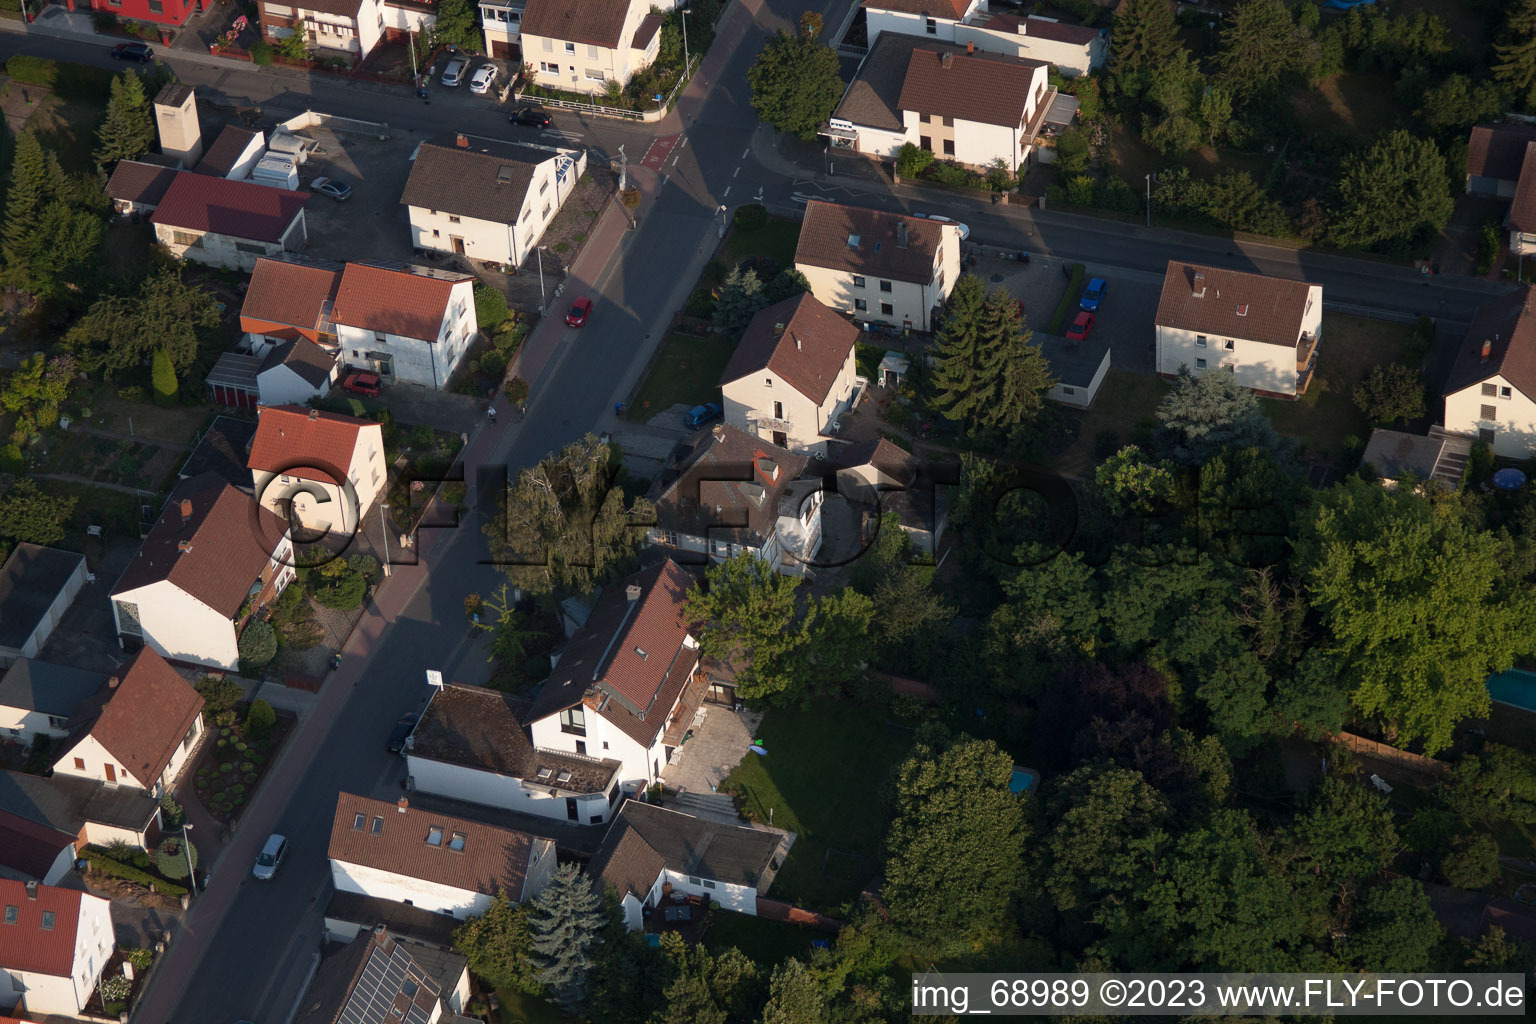 District Dannstadt in Dannstadt-Schauernheim in the state Rhineland-Palatinate, Germany from the drone perspective